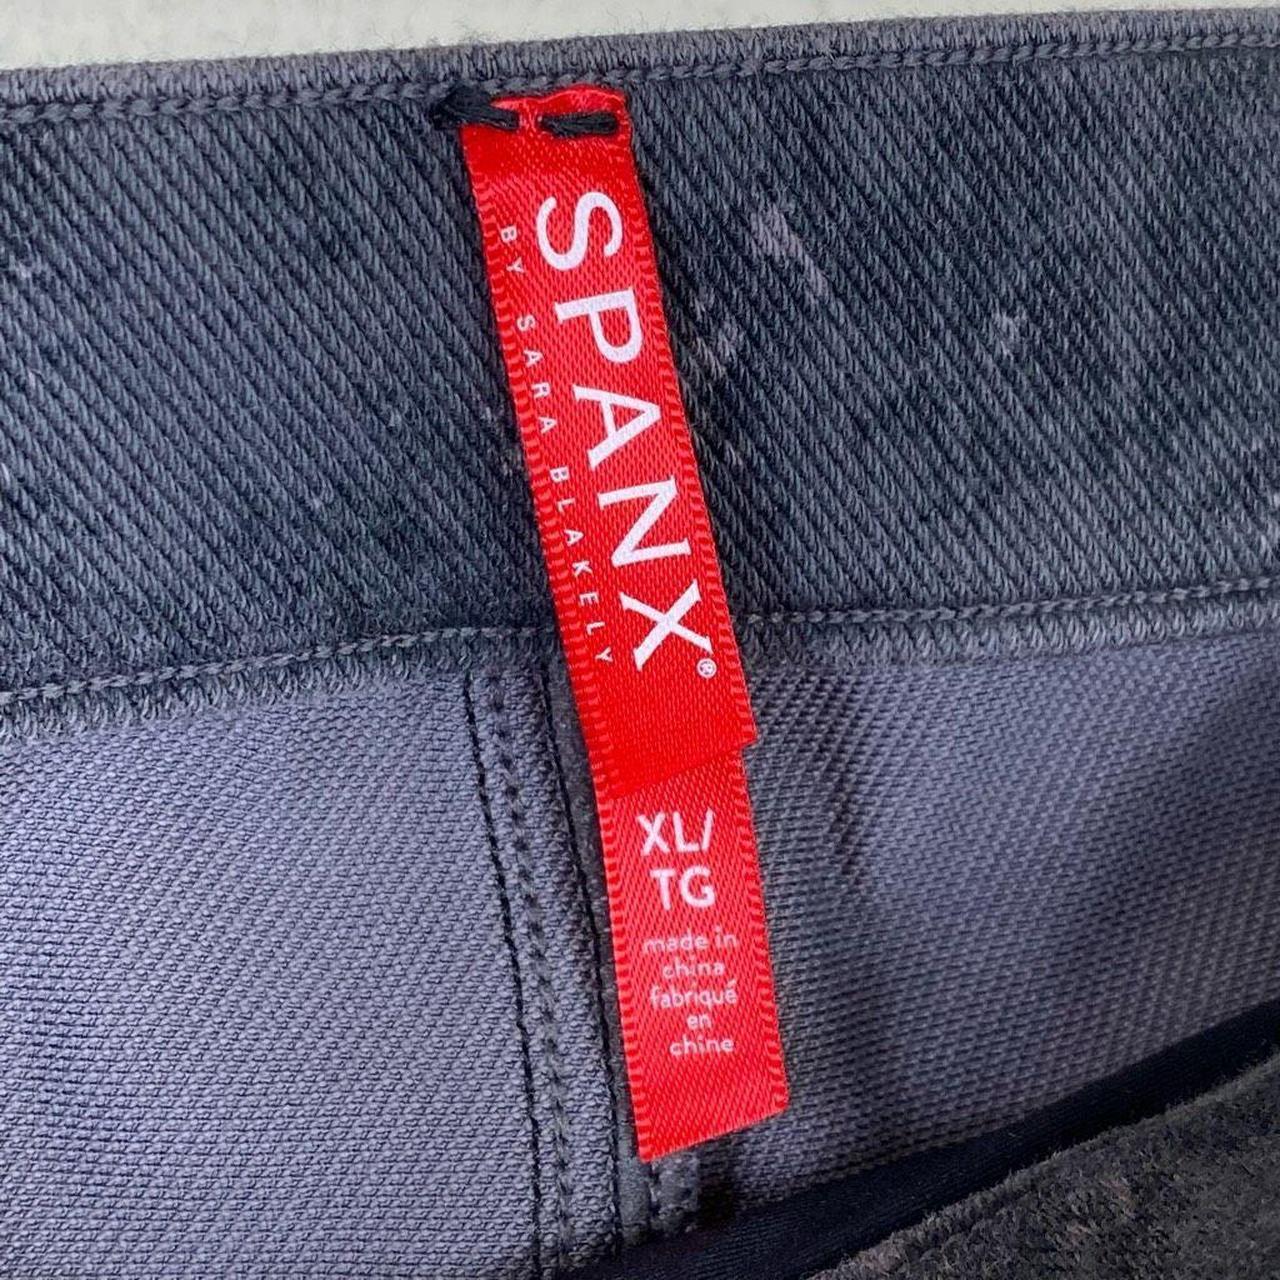 Spanx Mottled Charcoal Grey Skinny Jean Shaping - Depop